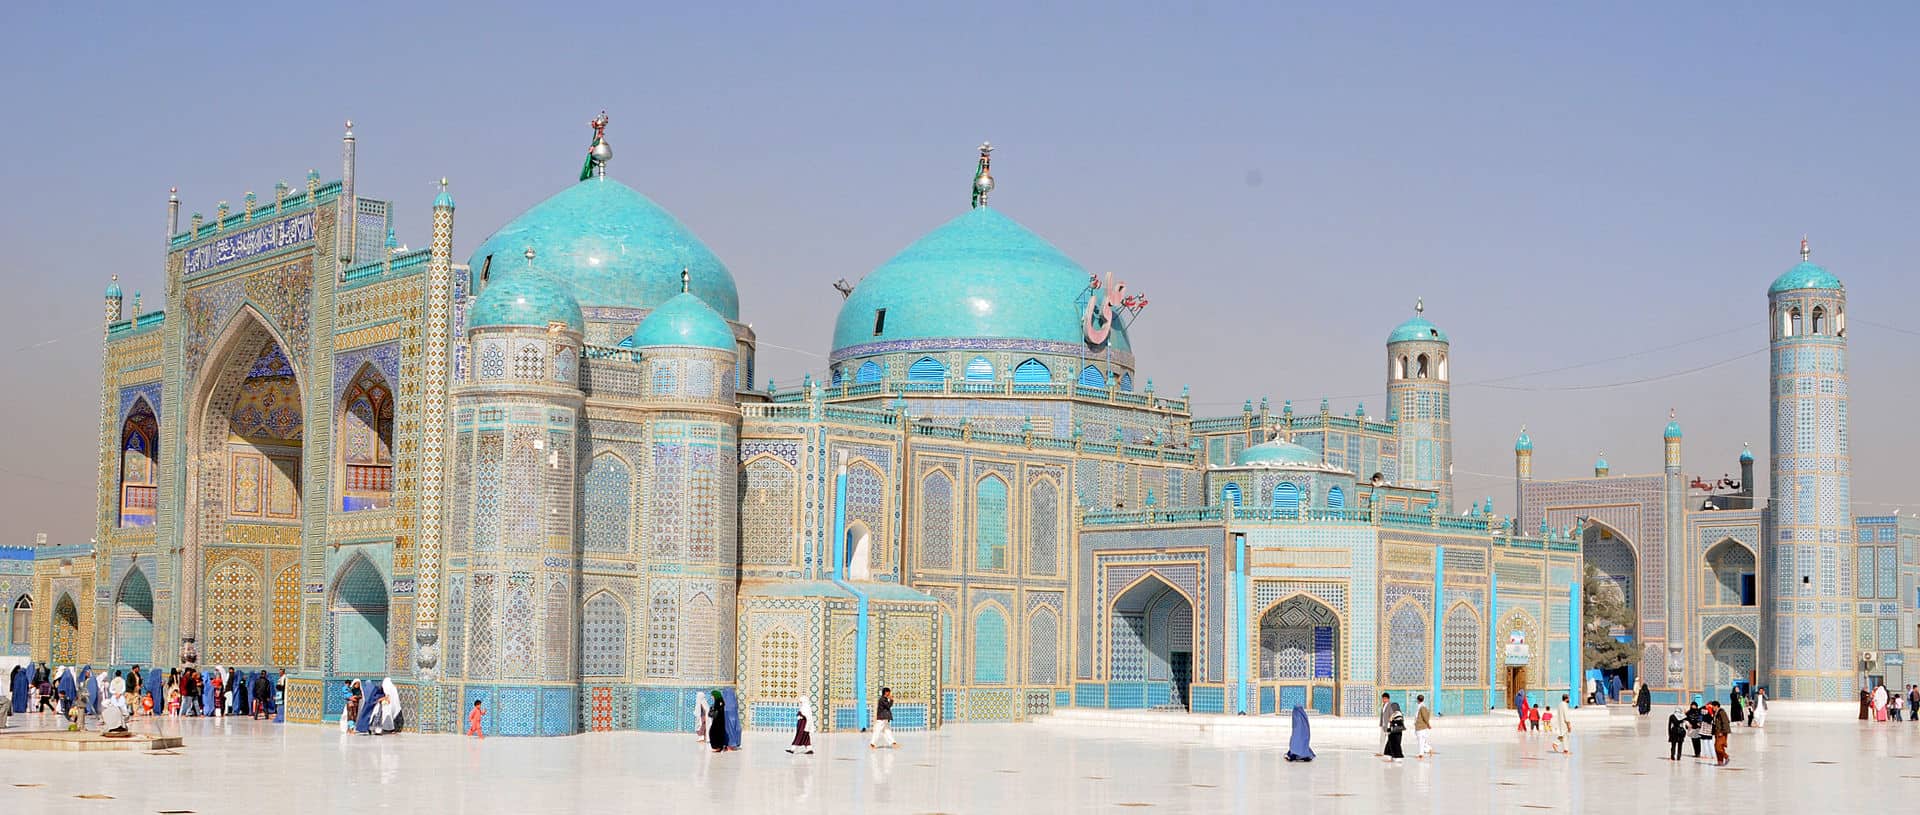 National monument of Afghanistan - Mazar-e-Sharif, Shrine of Ali (The Blue Mosque) 